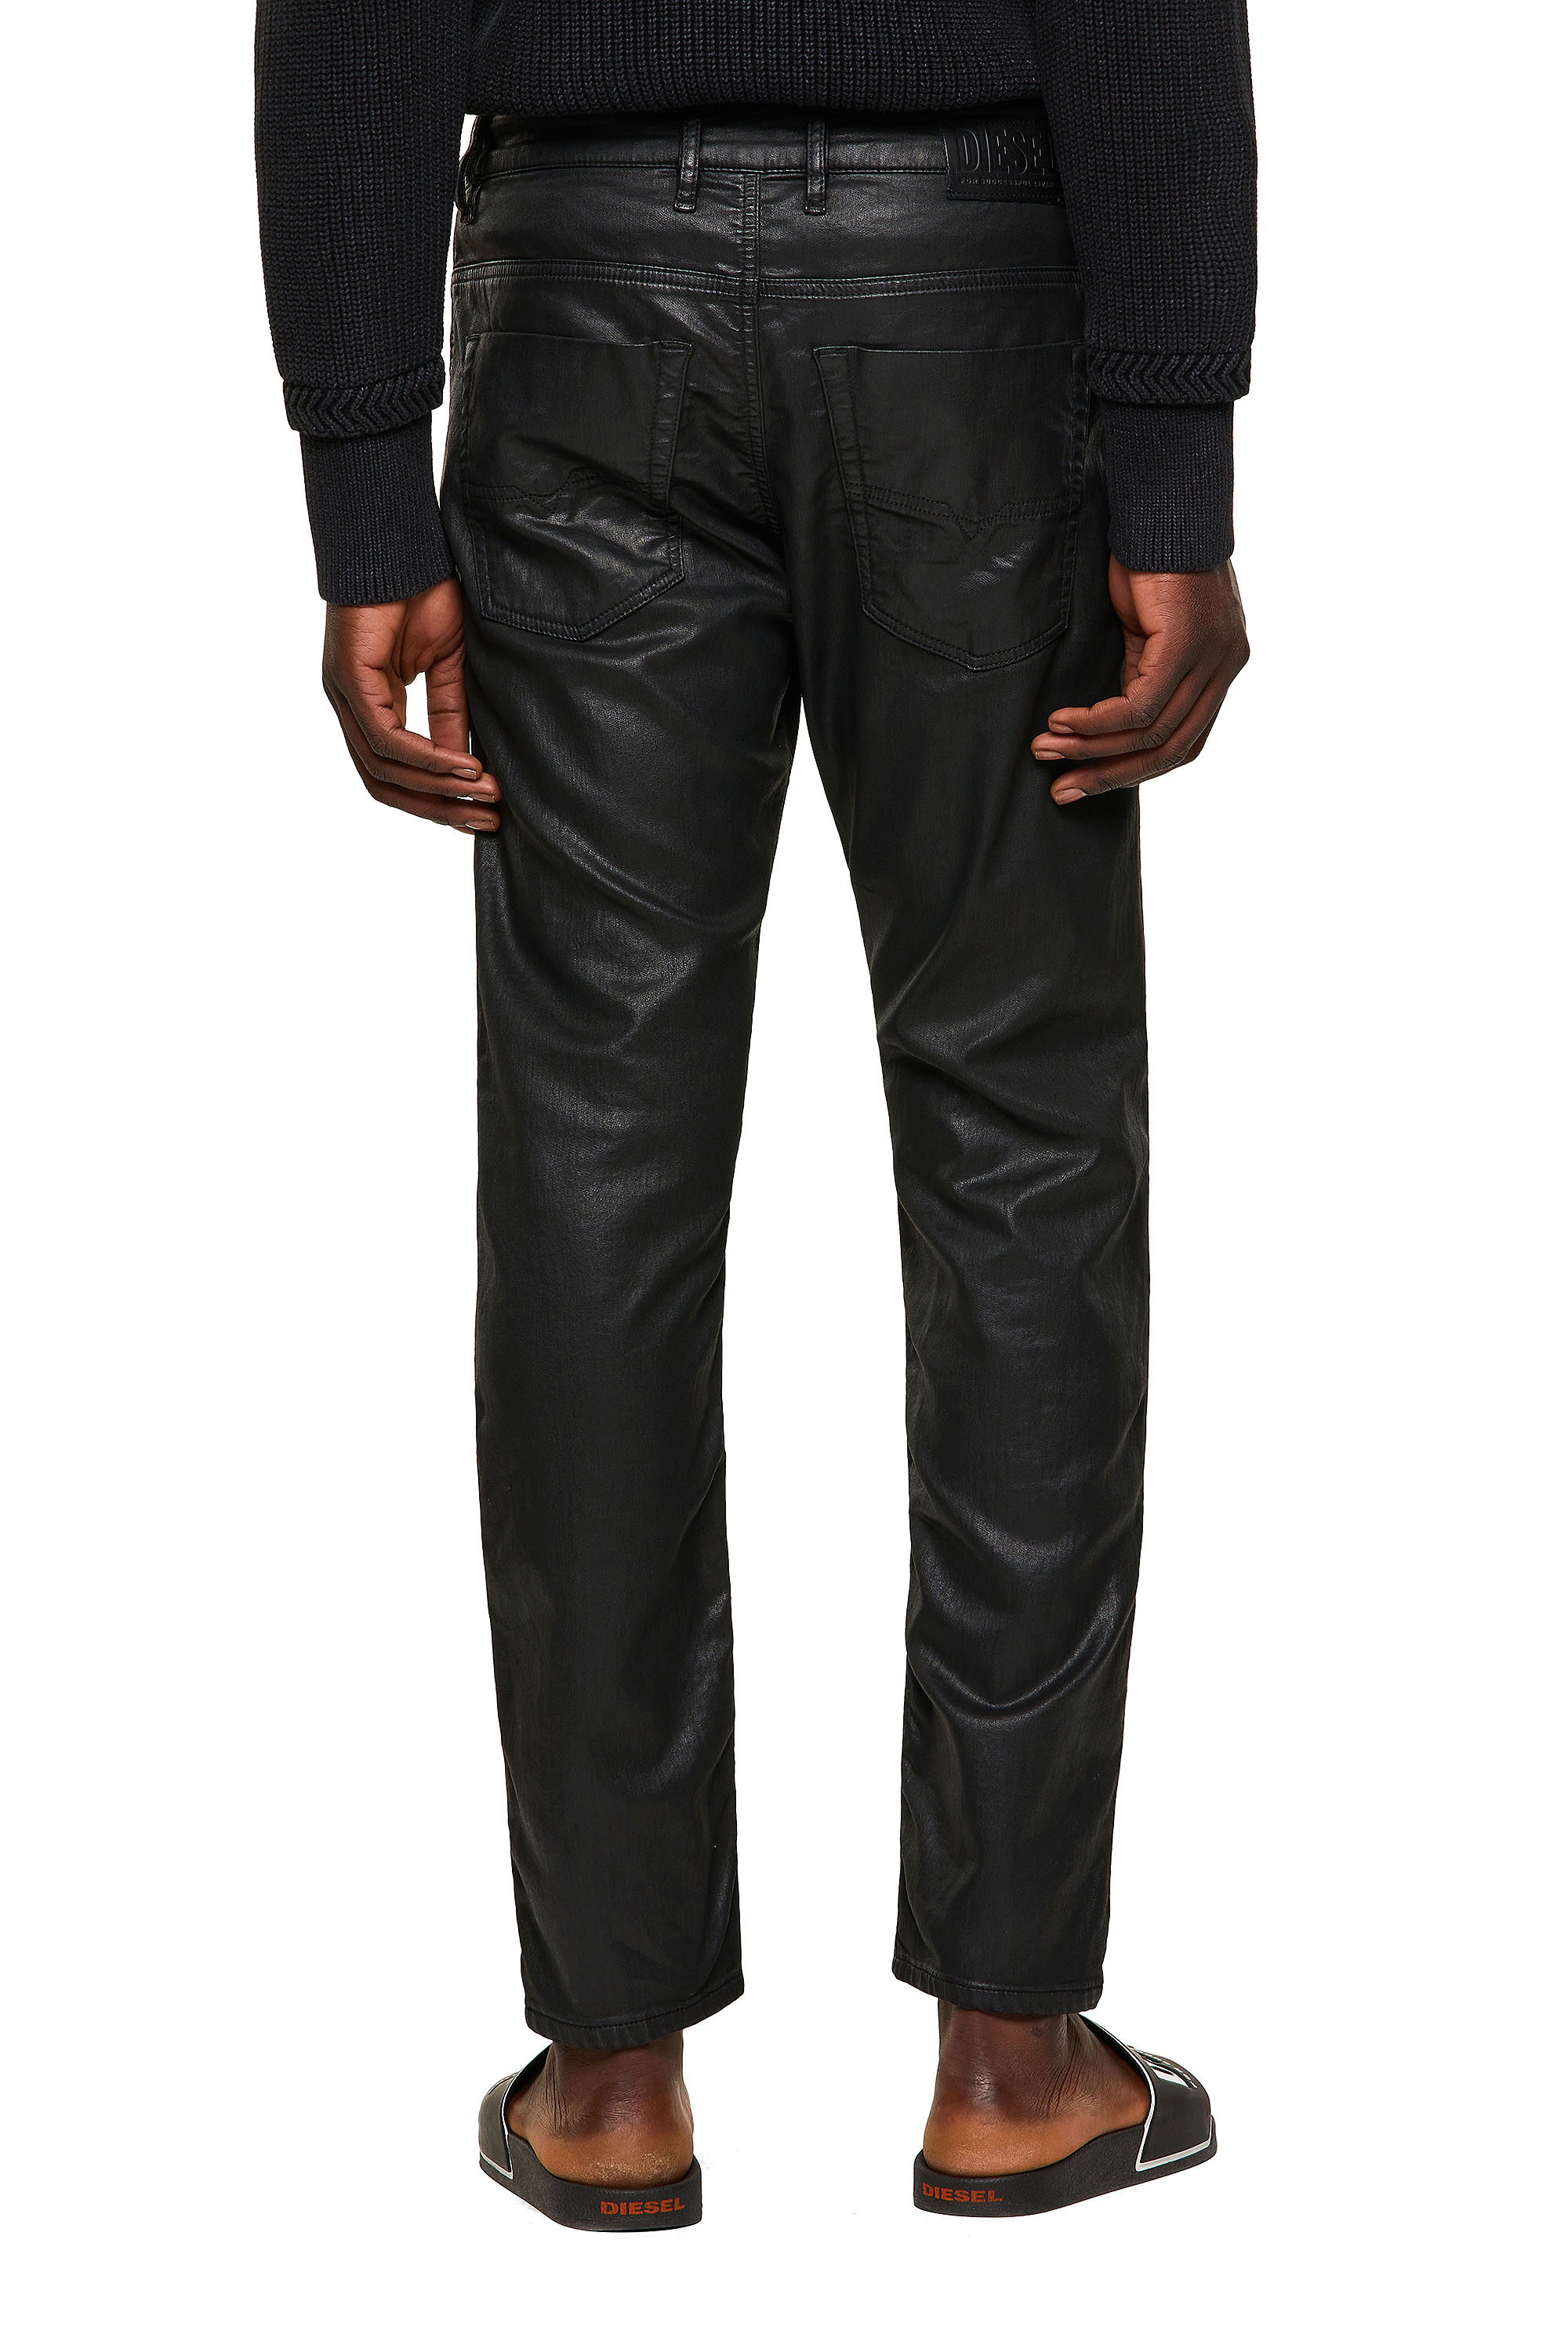 Krooley Tapered JoggJeans® 0849R: Black/Dark Grey Wash, Coated